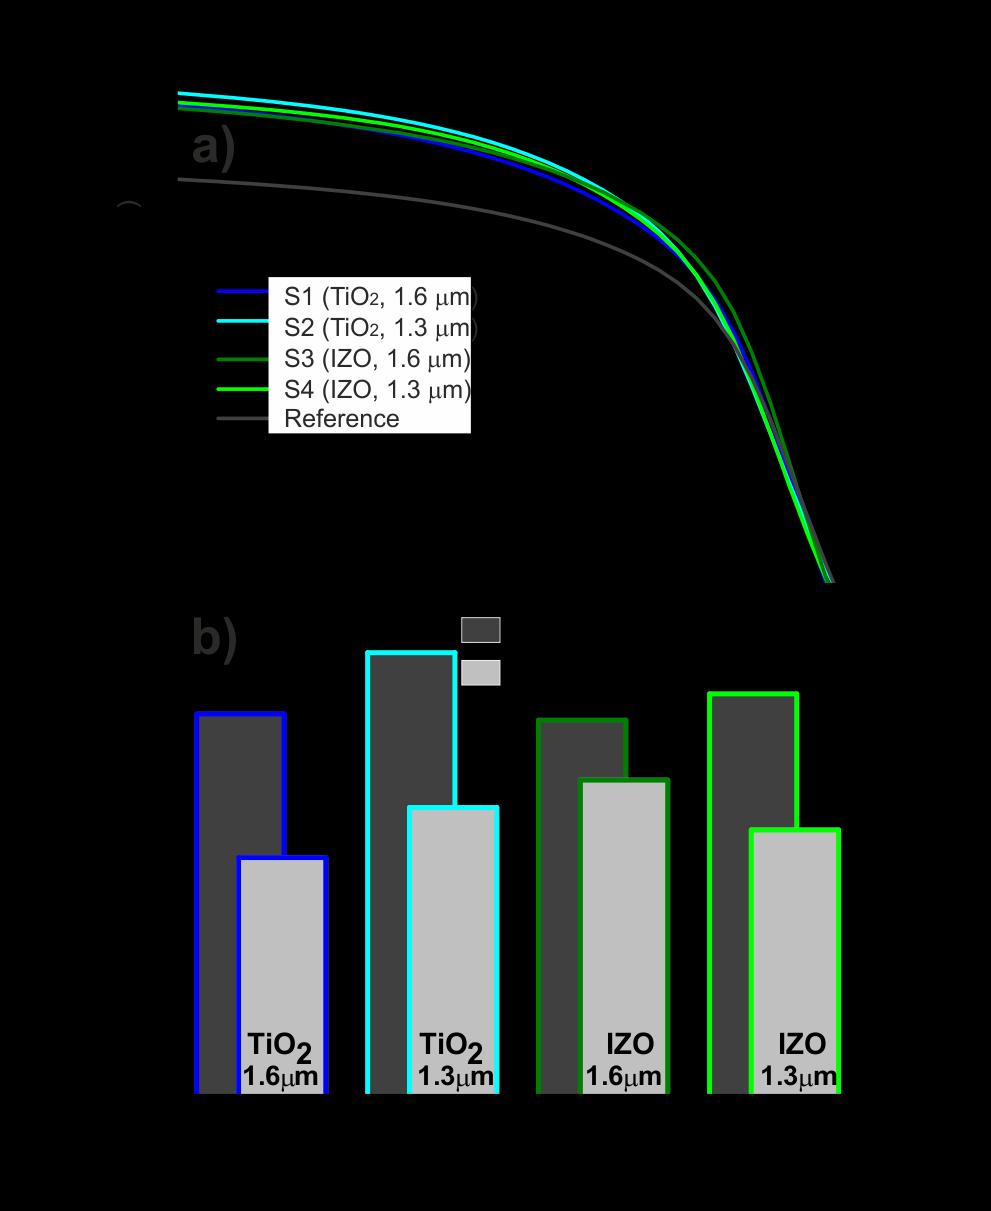 Opto-electronic response of nip a-si:h cells 29 Planar REF TiO 2 (1.6 mm) TiO 2 (1.3 mm) IZO (1.6 mm) IZO (1.3 mm) Efficiency 4.37 % 4.